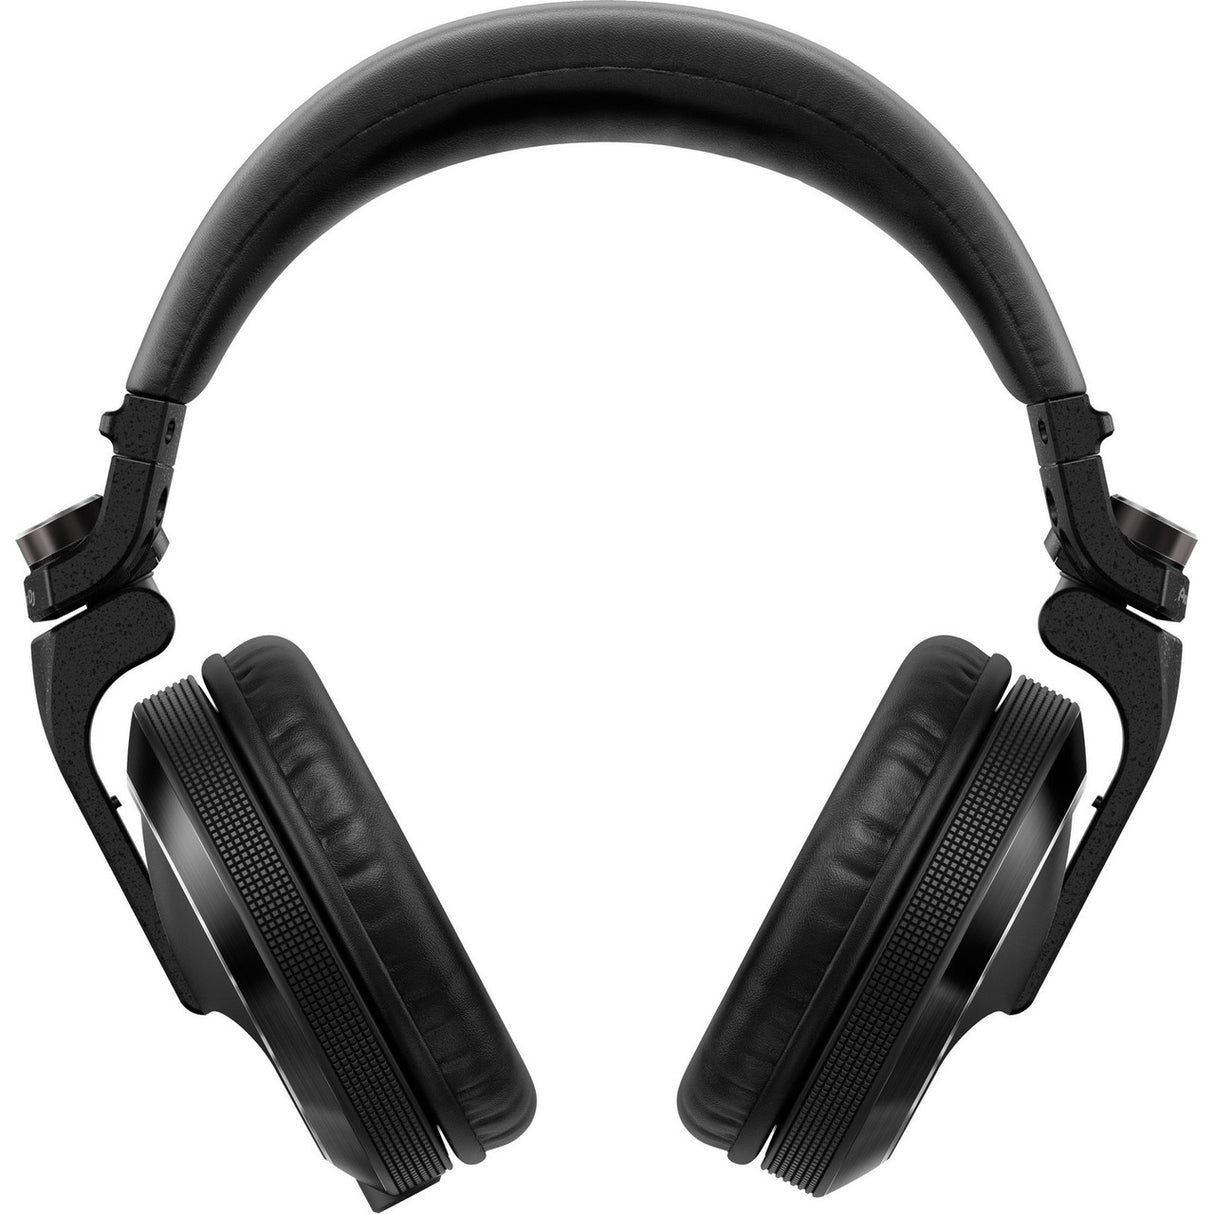 Pioneer DJ HDJ-X7-K | Over Ear DJ Headphones Black